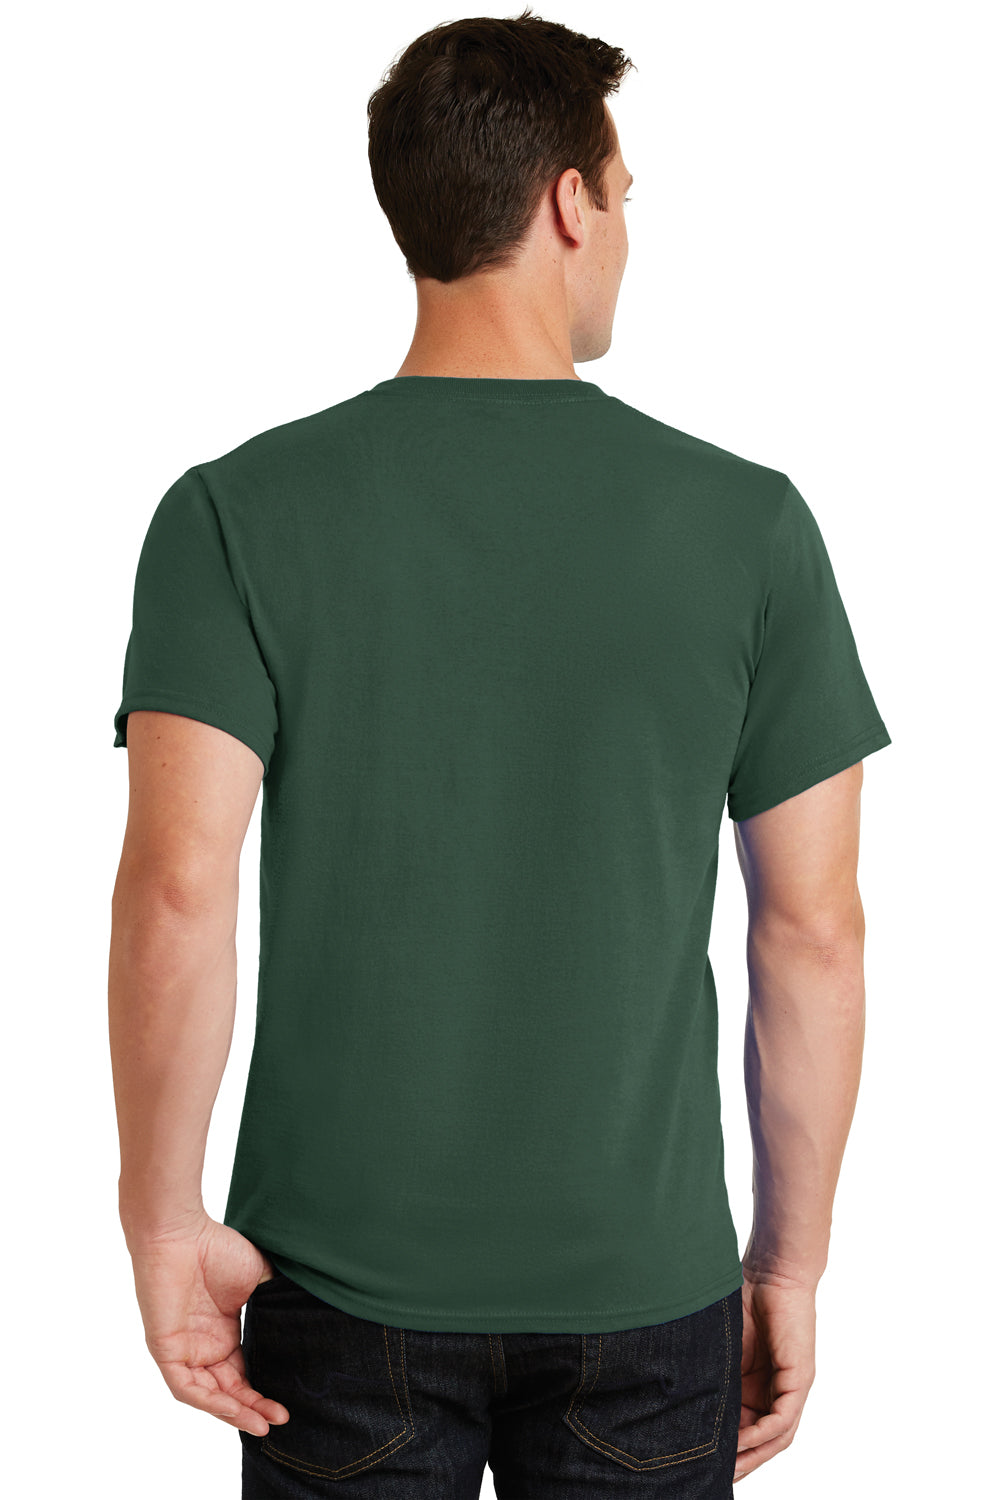 Port & Company PC61 Mens Essential Short Sleeve Crewneck T-Shirt Forest Green Back